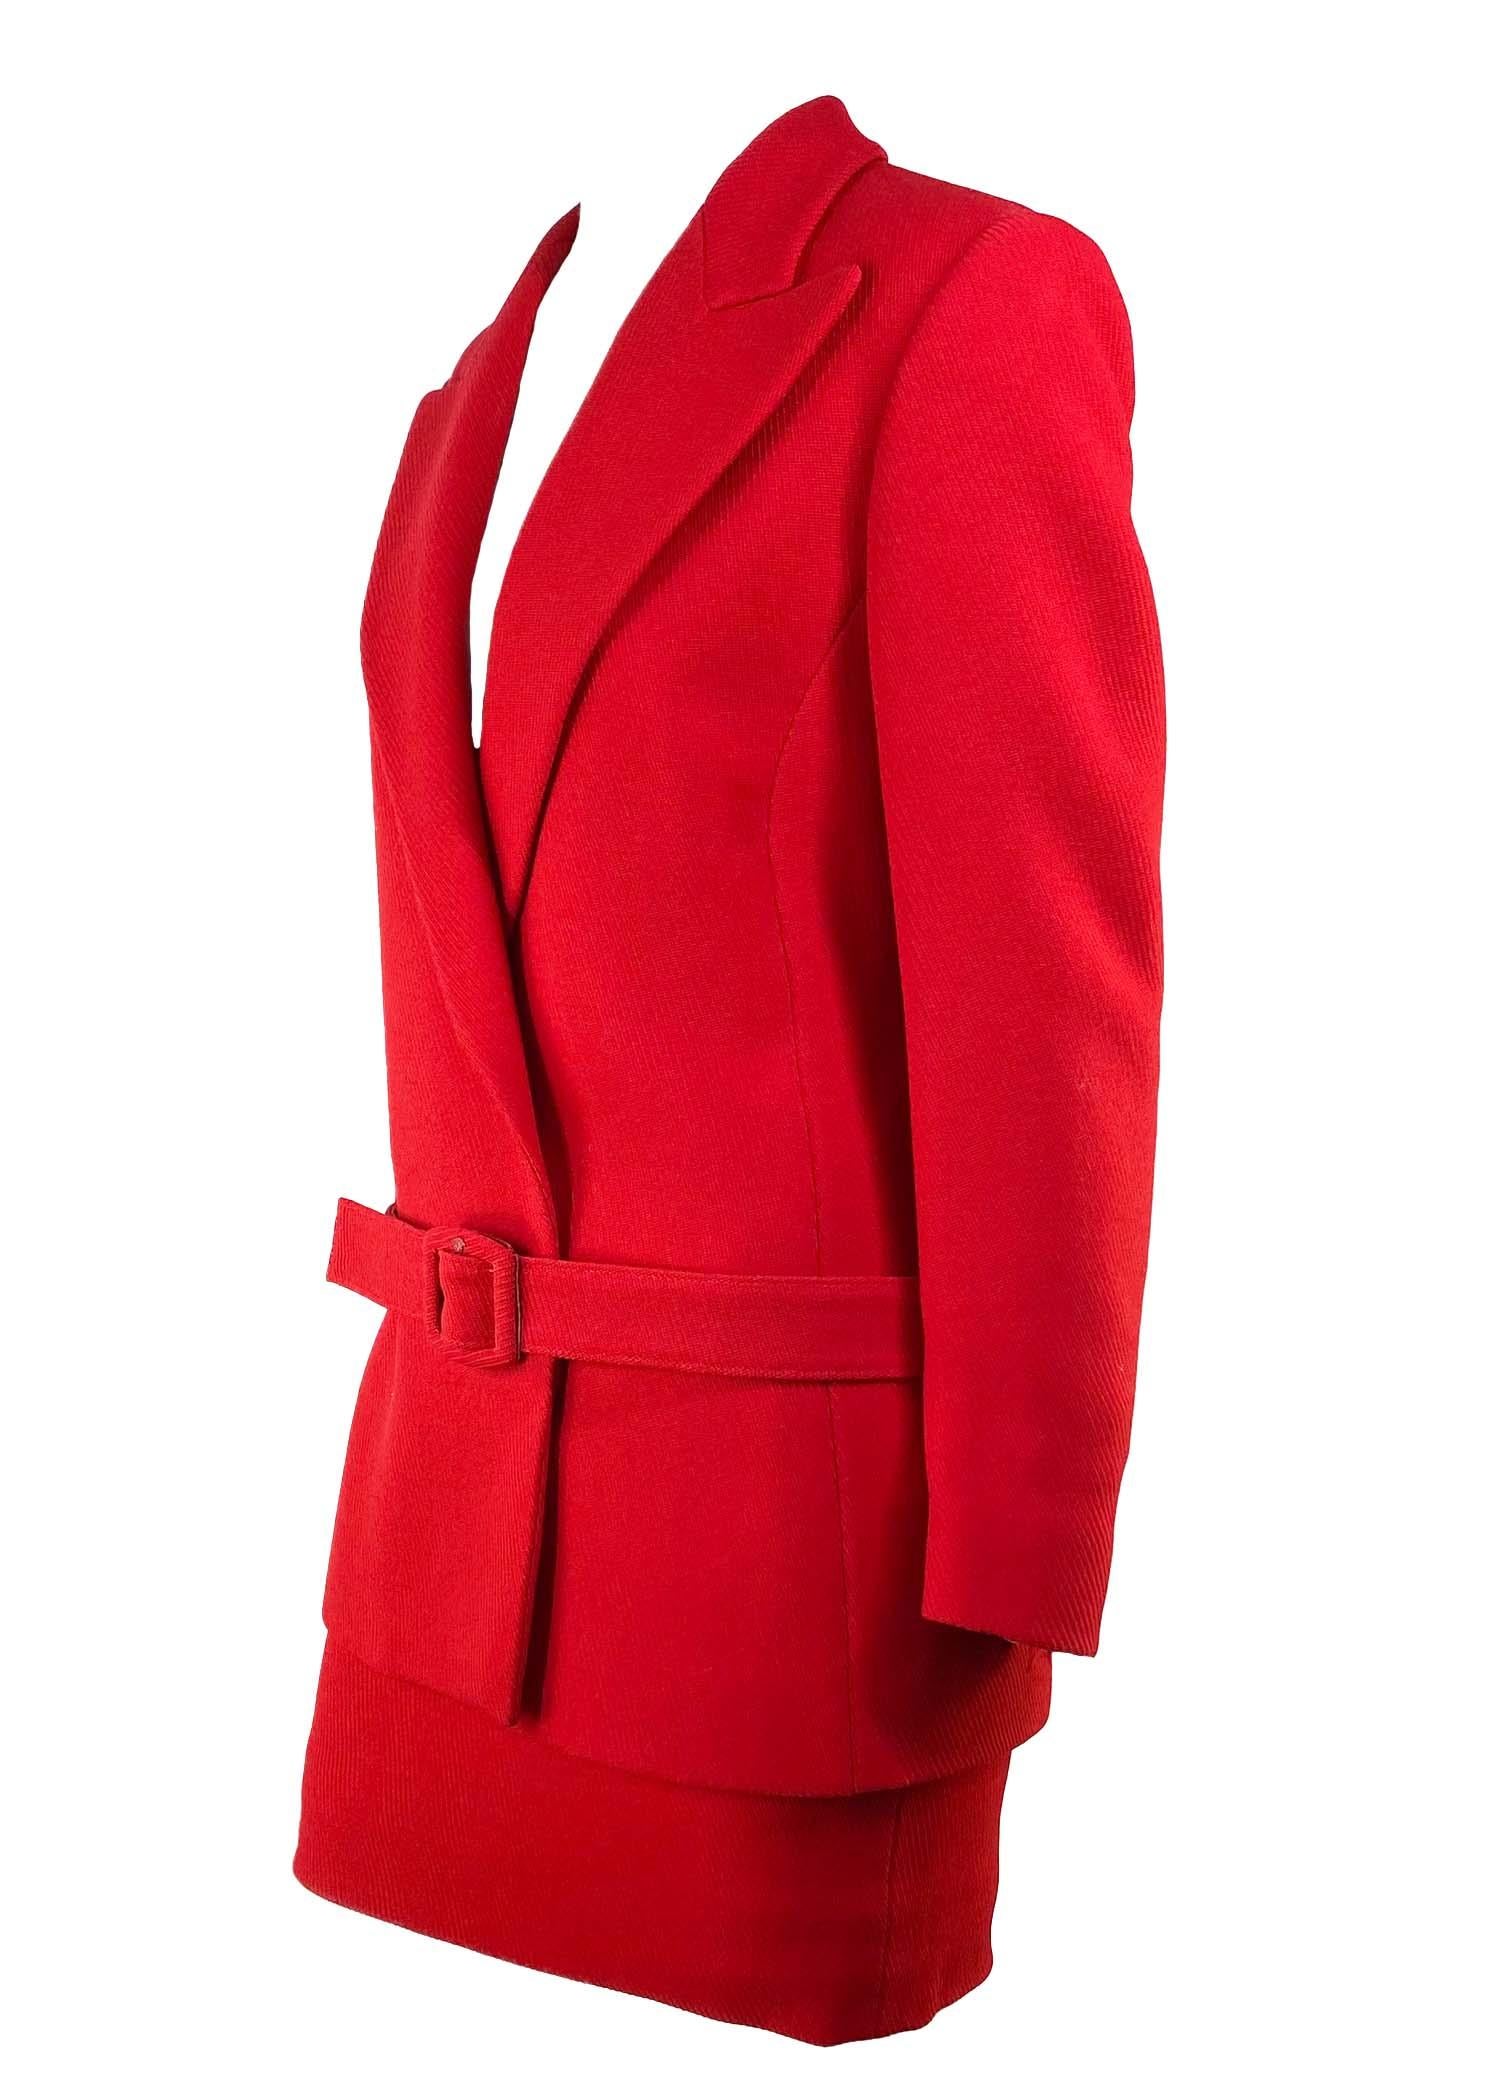 versace red suit